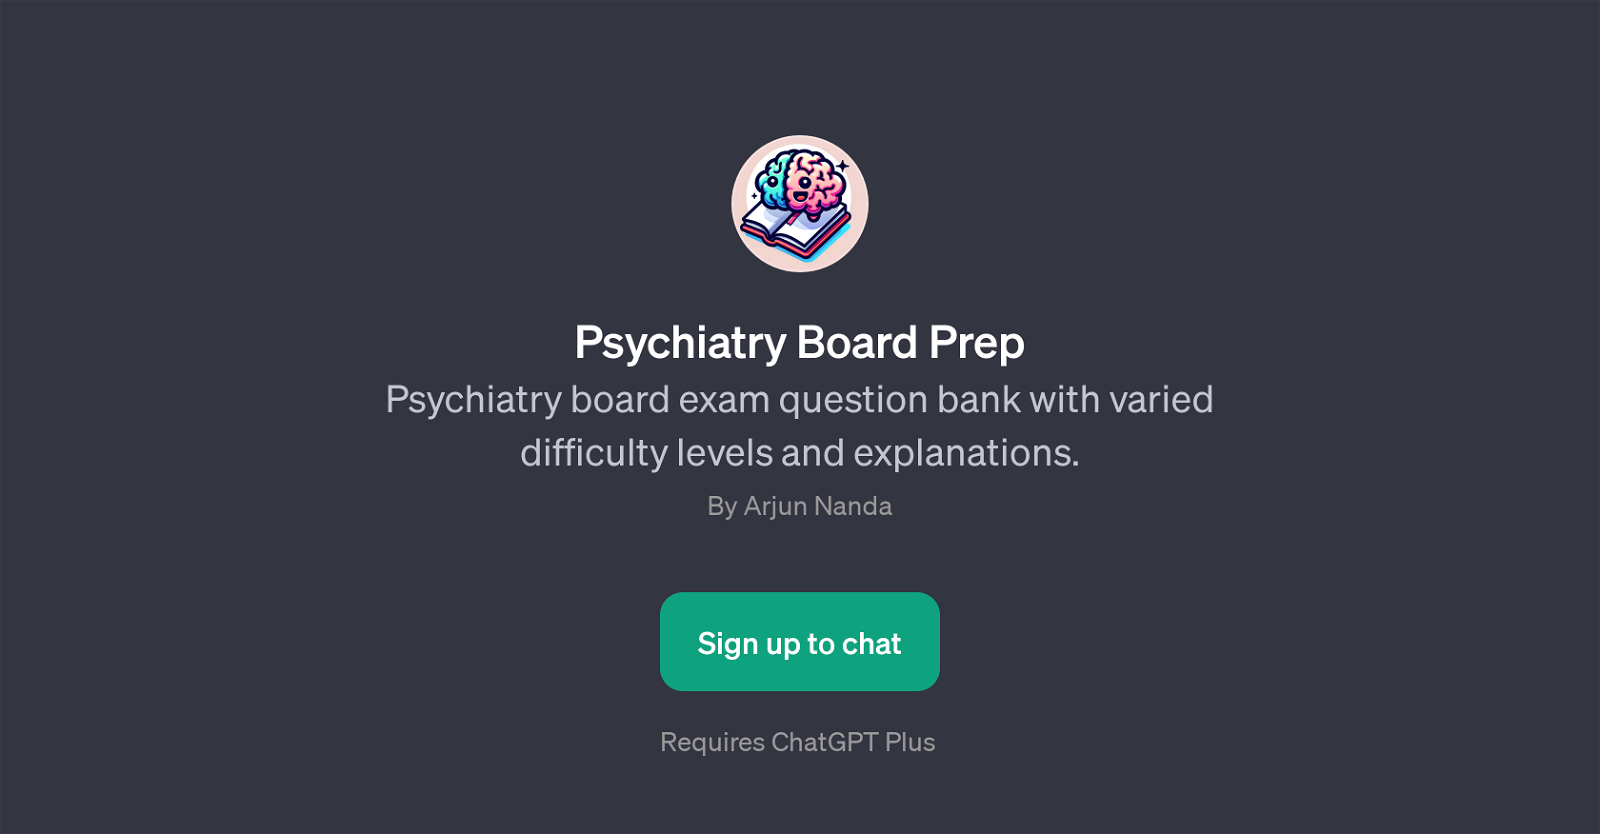 Psychiatry Board Prep website